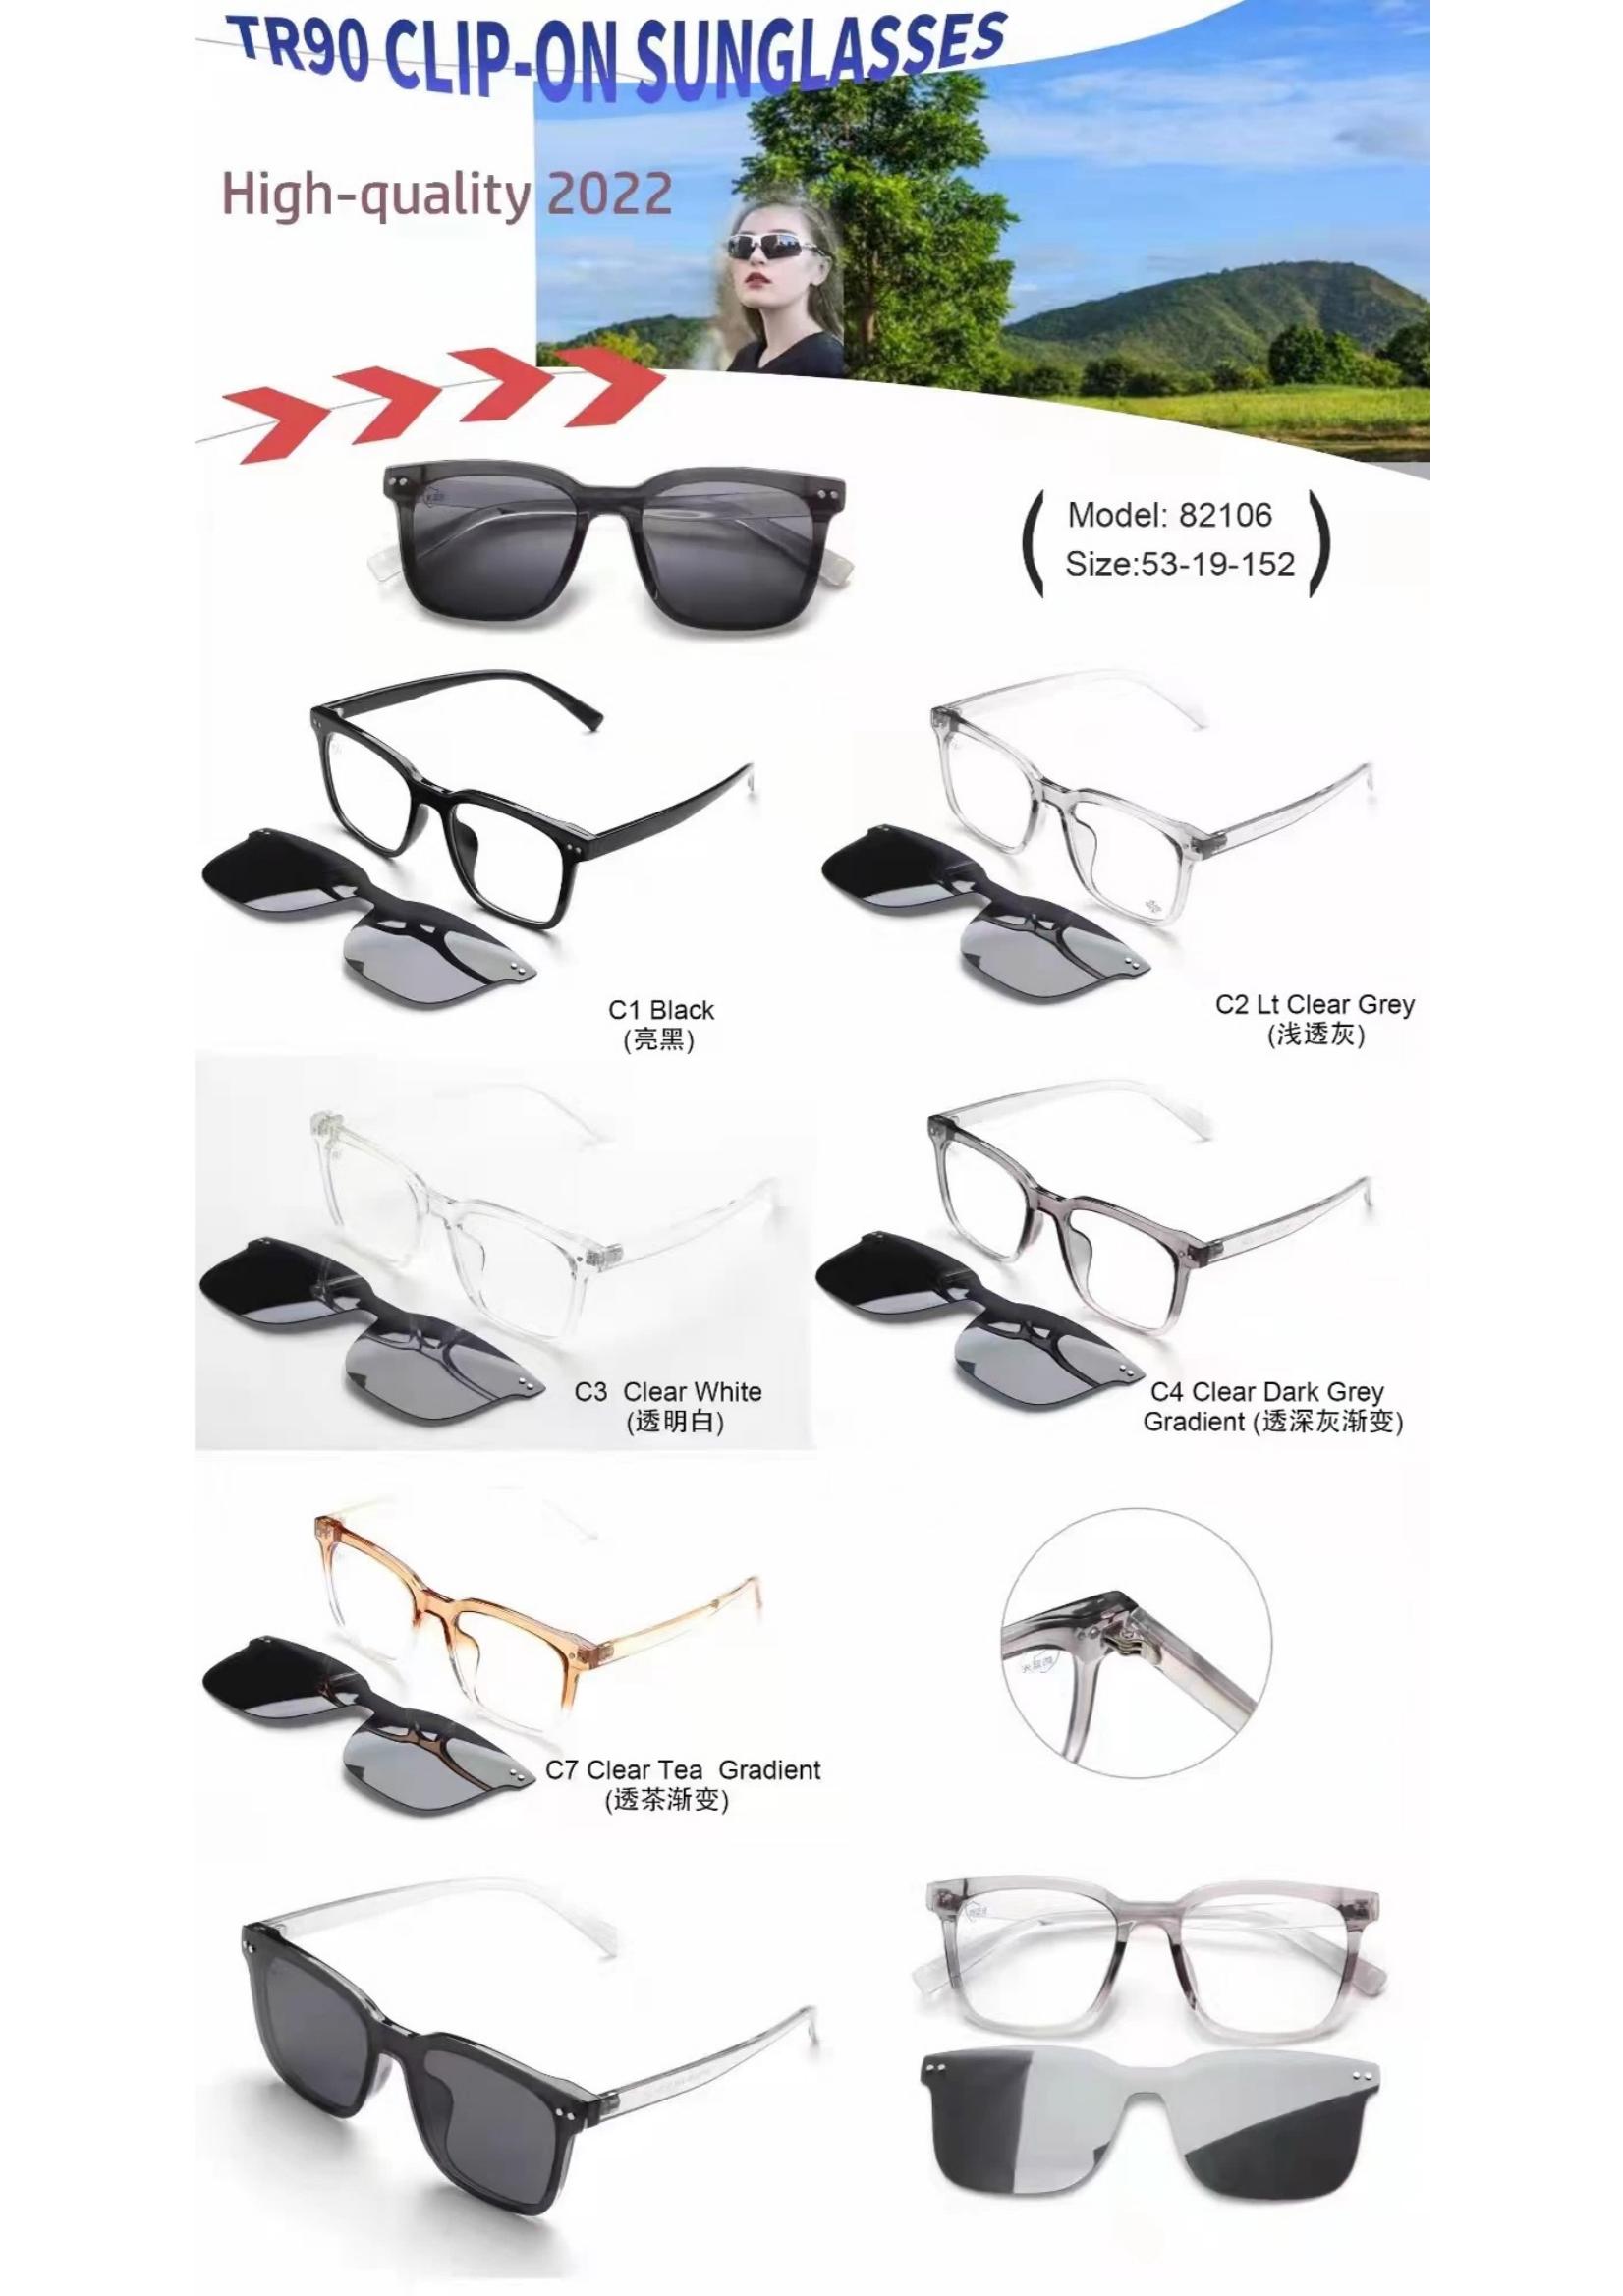 TR stylish sunglasses